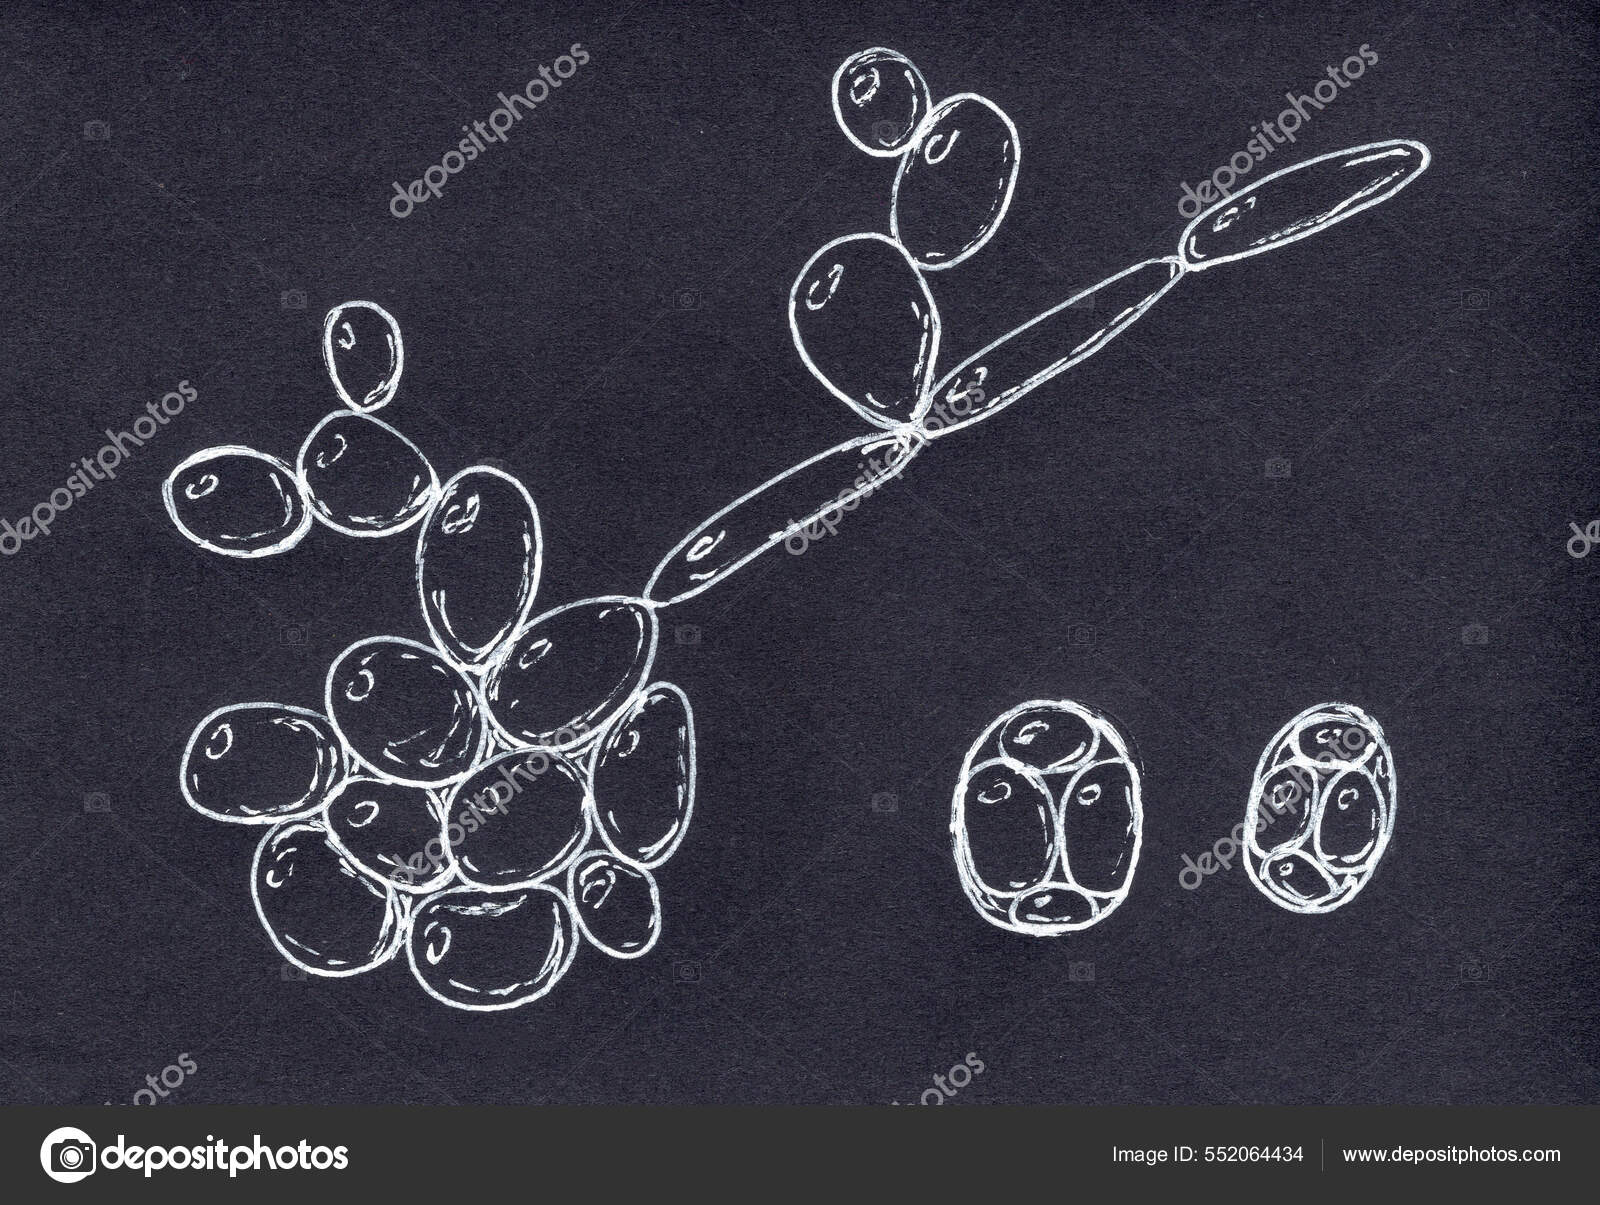 Saccharomyces Cerevisiae Yeast Scientific Hand Drawn Illustration ...